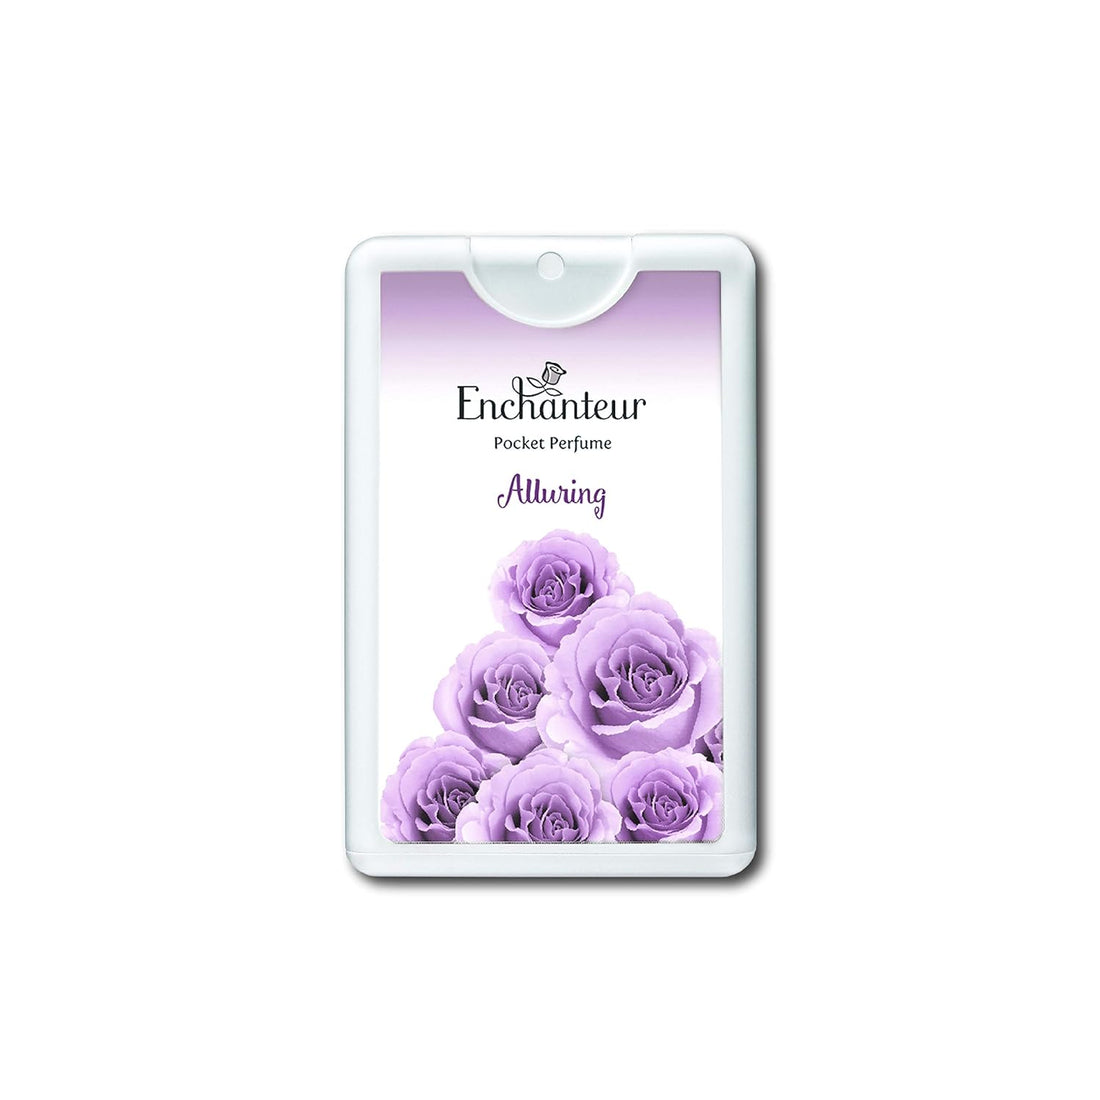 Enchanteur Pocket Perfume EDT Alluring (18ml)